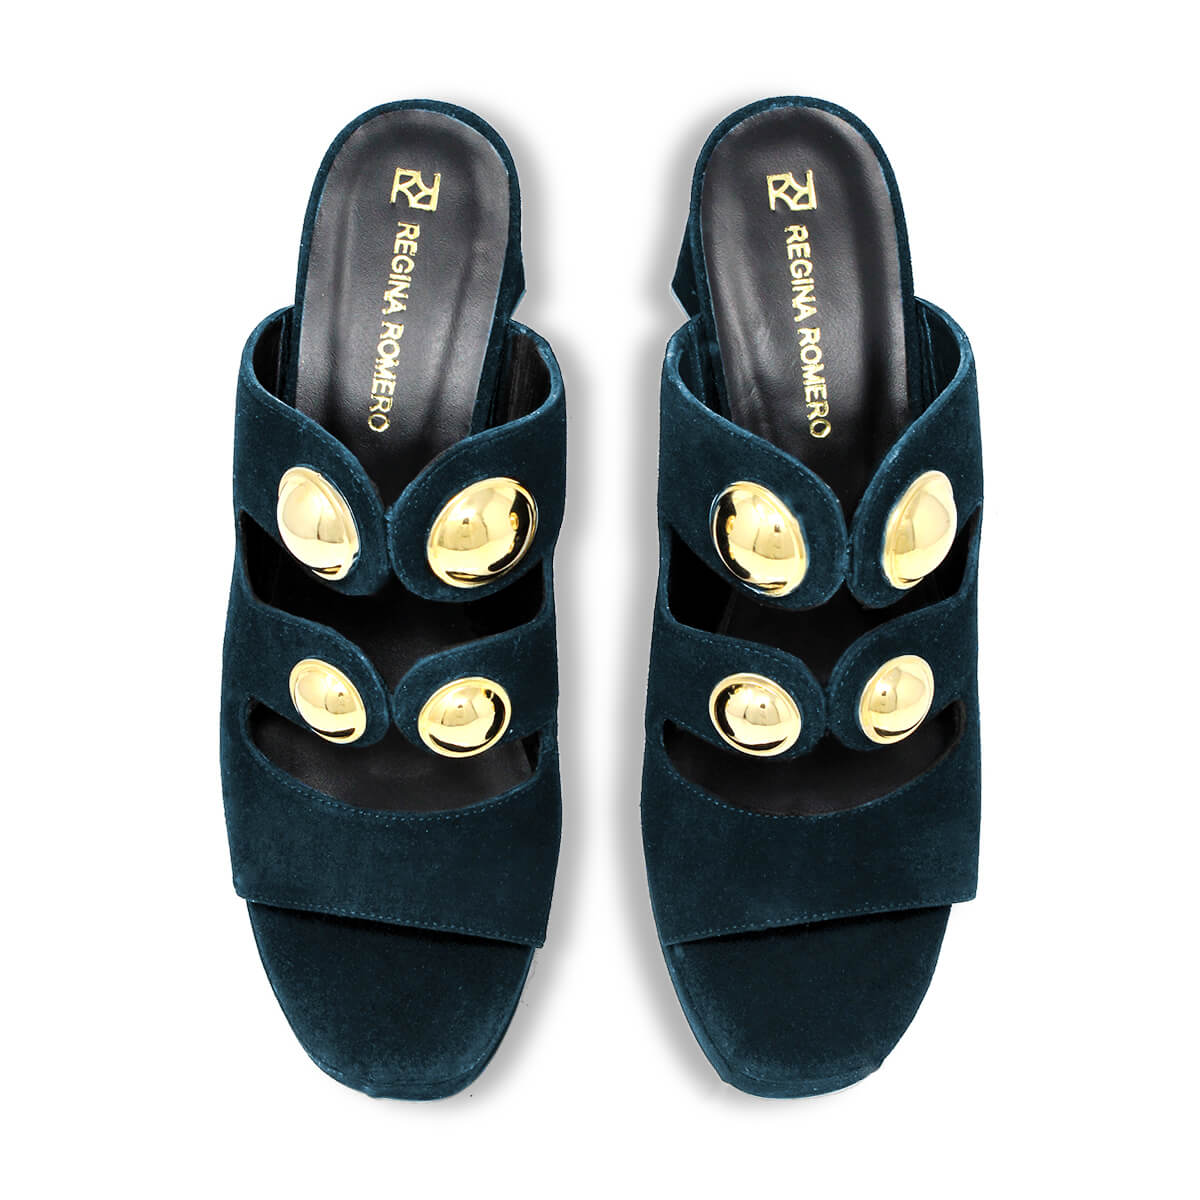 SIBIL 95 - Ante Azul Verde Regina Romero Zapato Sandalia Plataforma Tacon Alto Para Dama en Piel